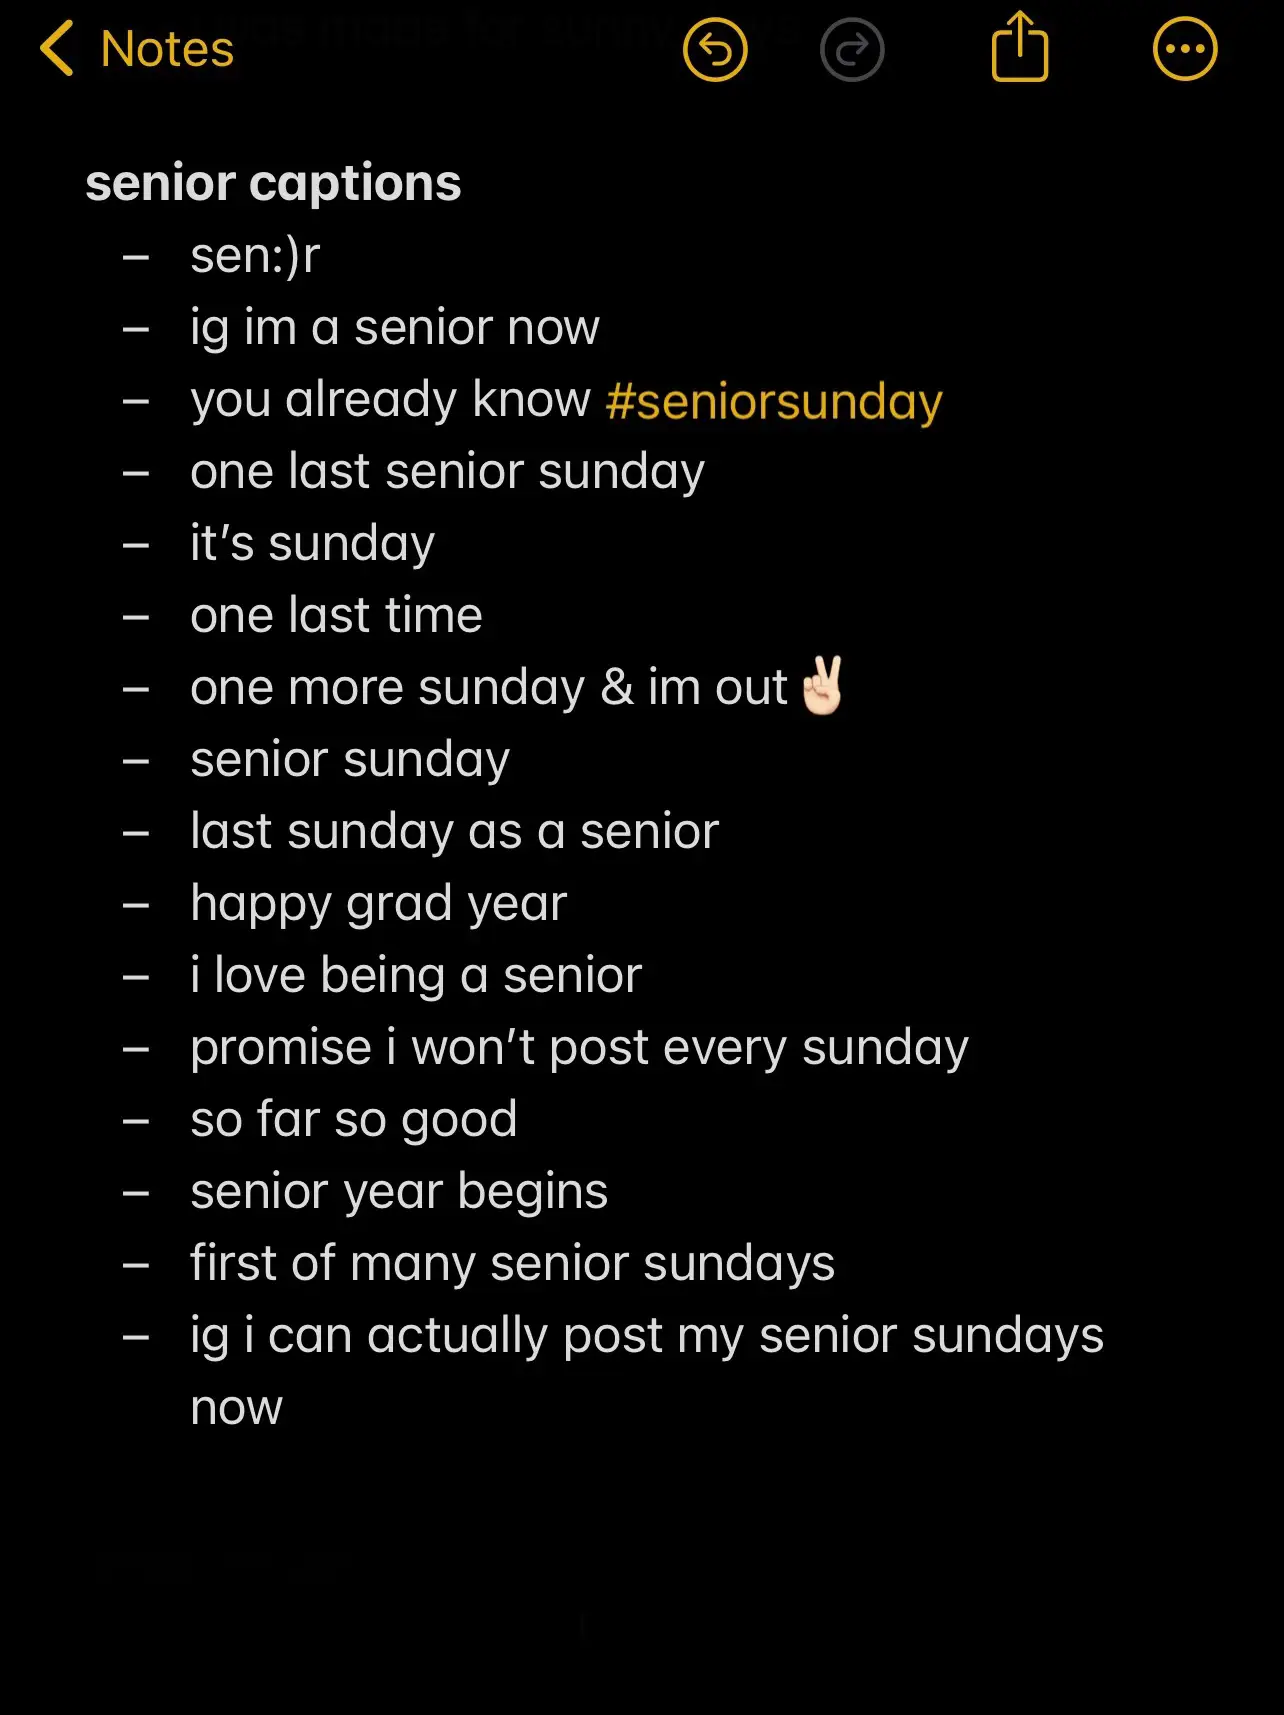  A list of senior